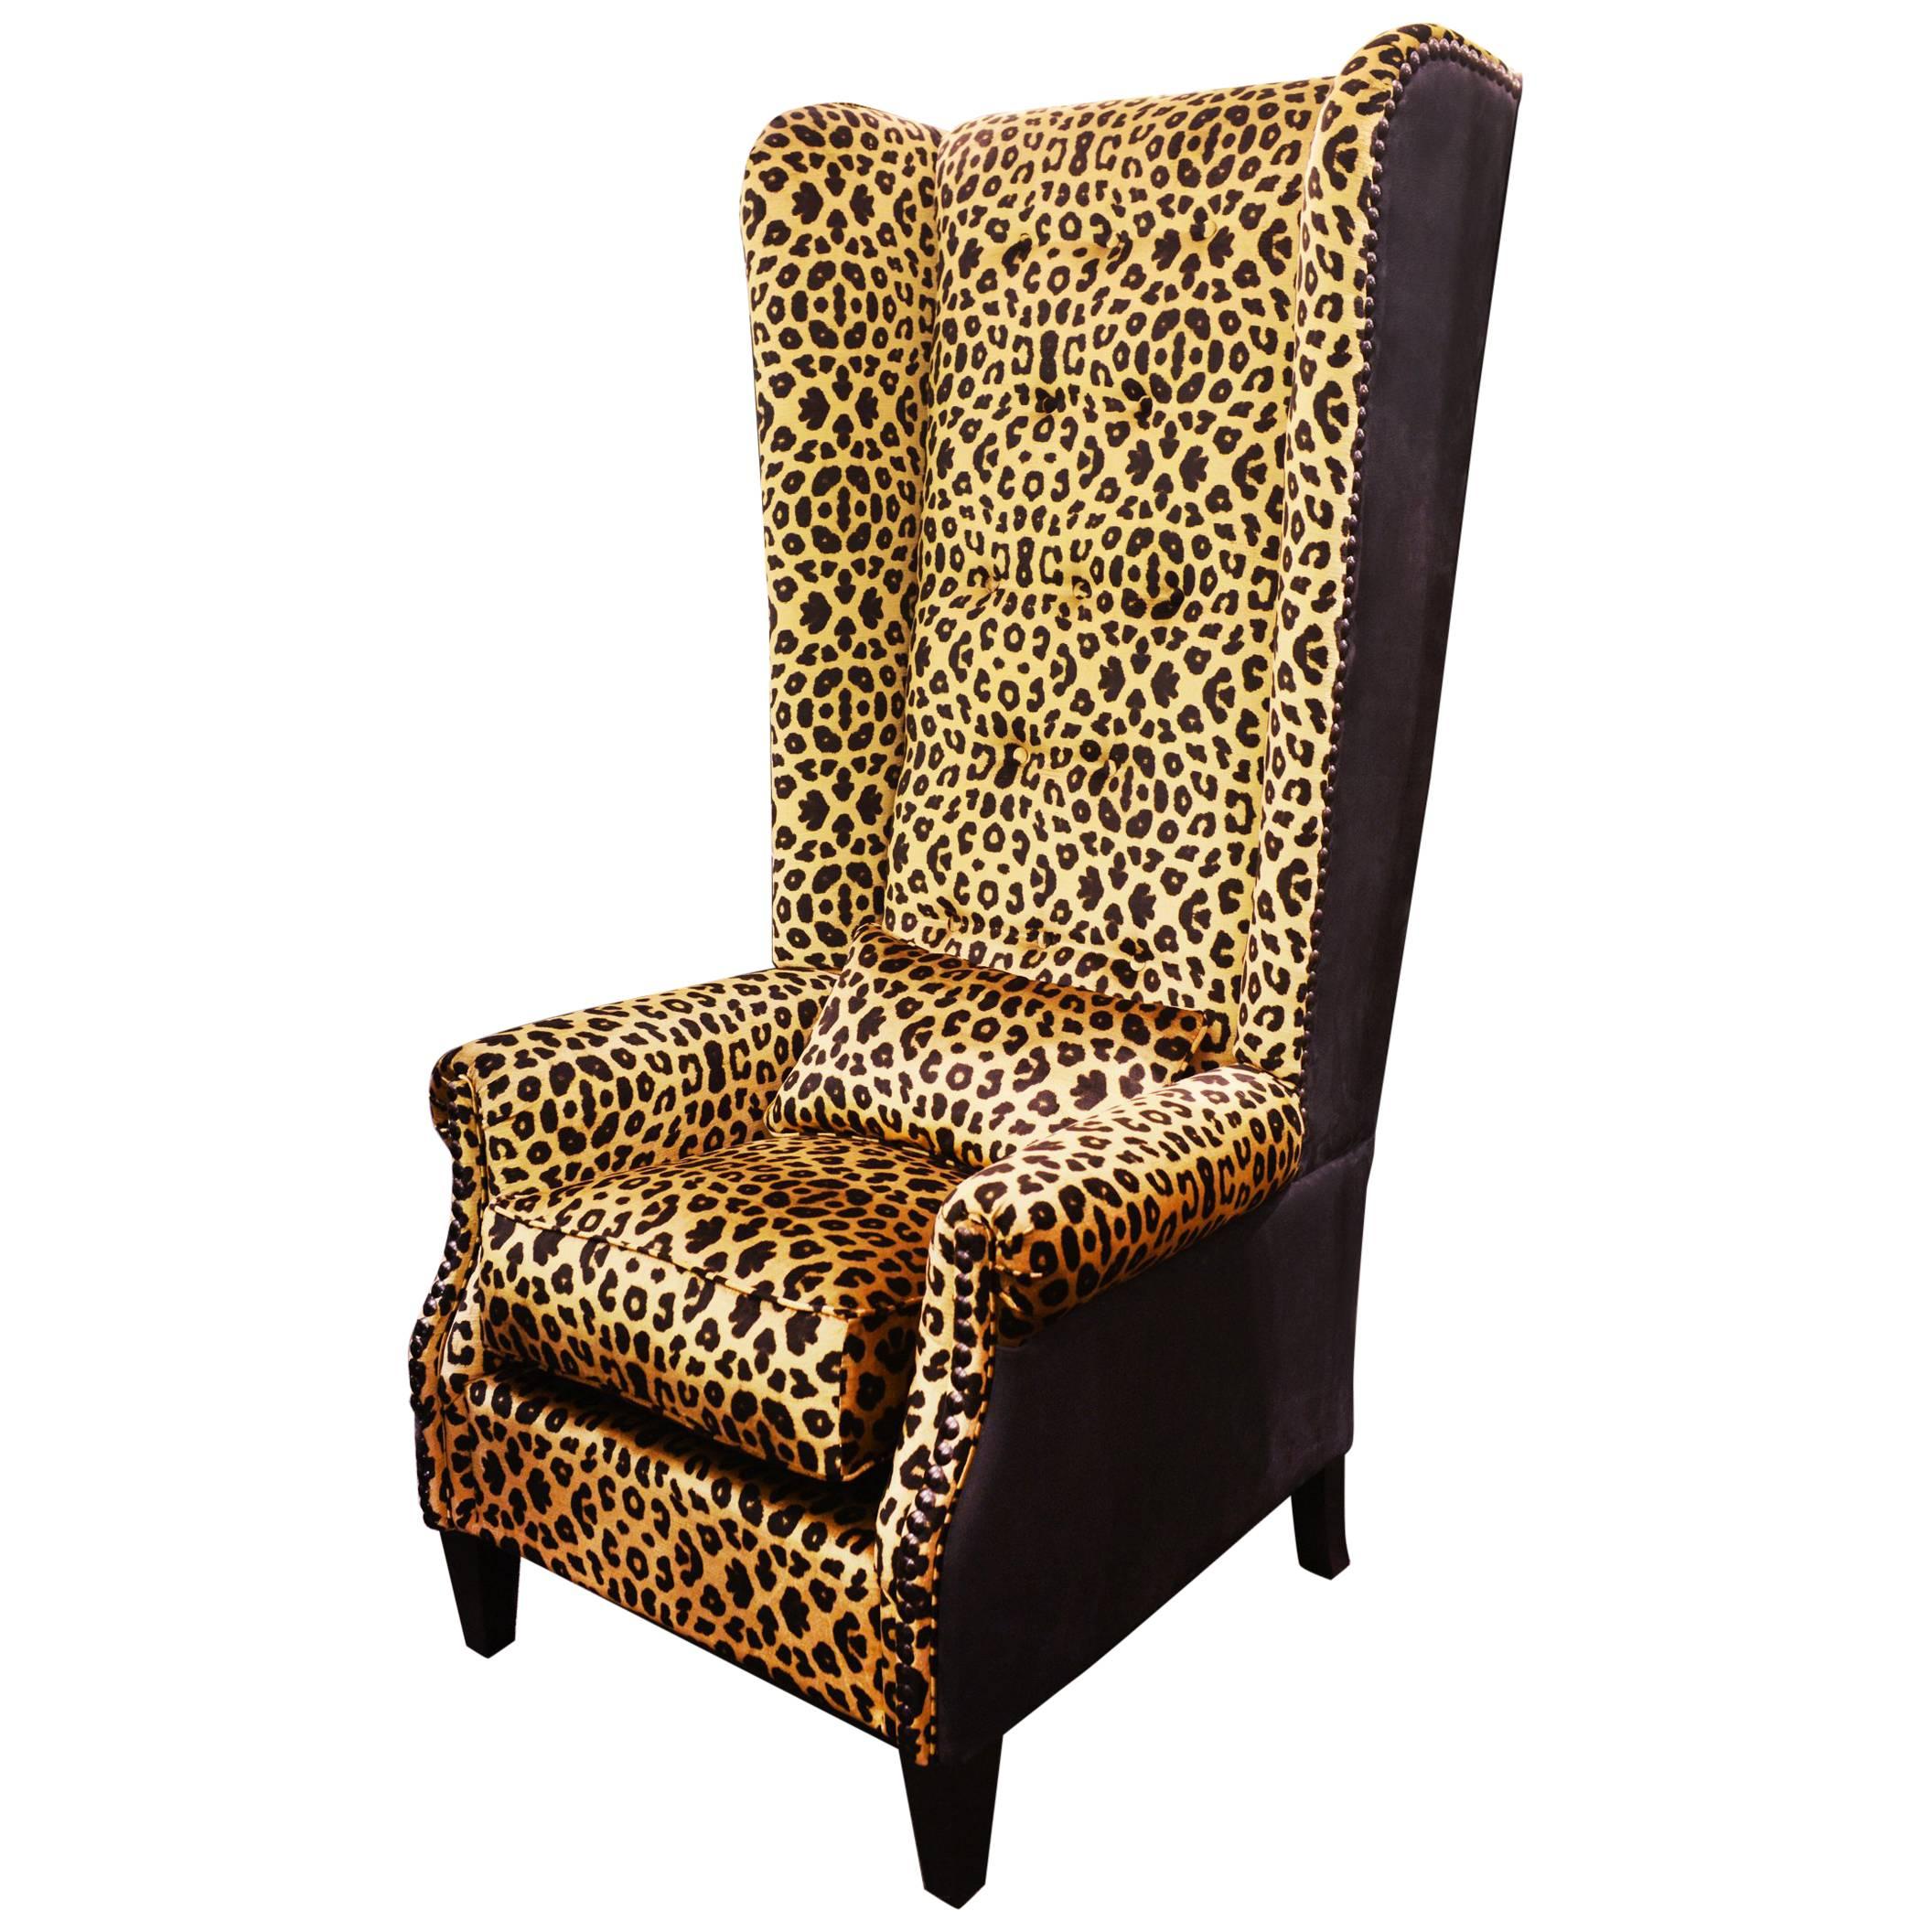 Leopard-Sessel mit schwarzem Nubuk-Leder und Samtstoff im Angebot